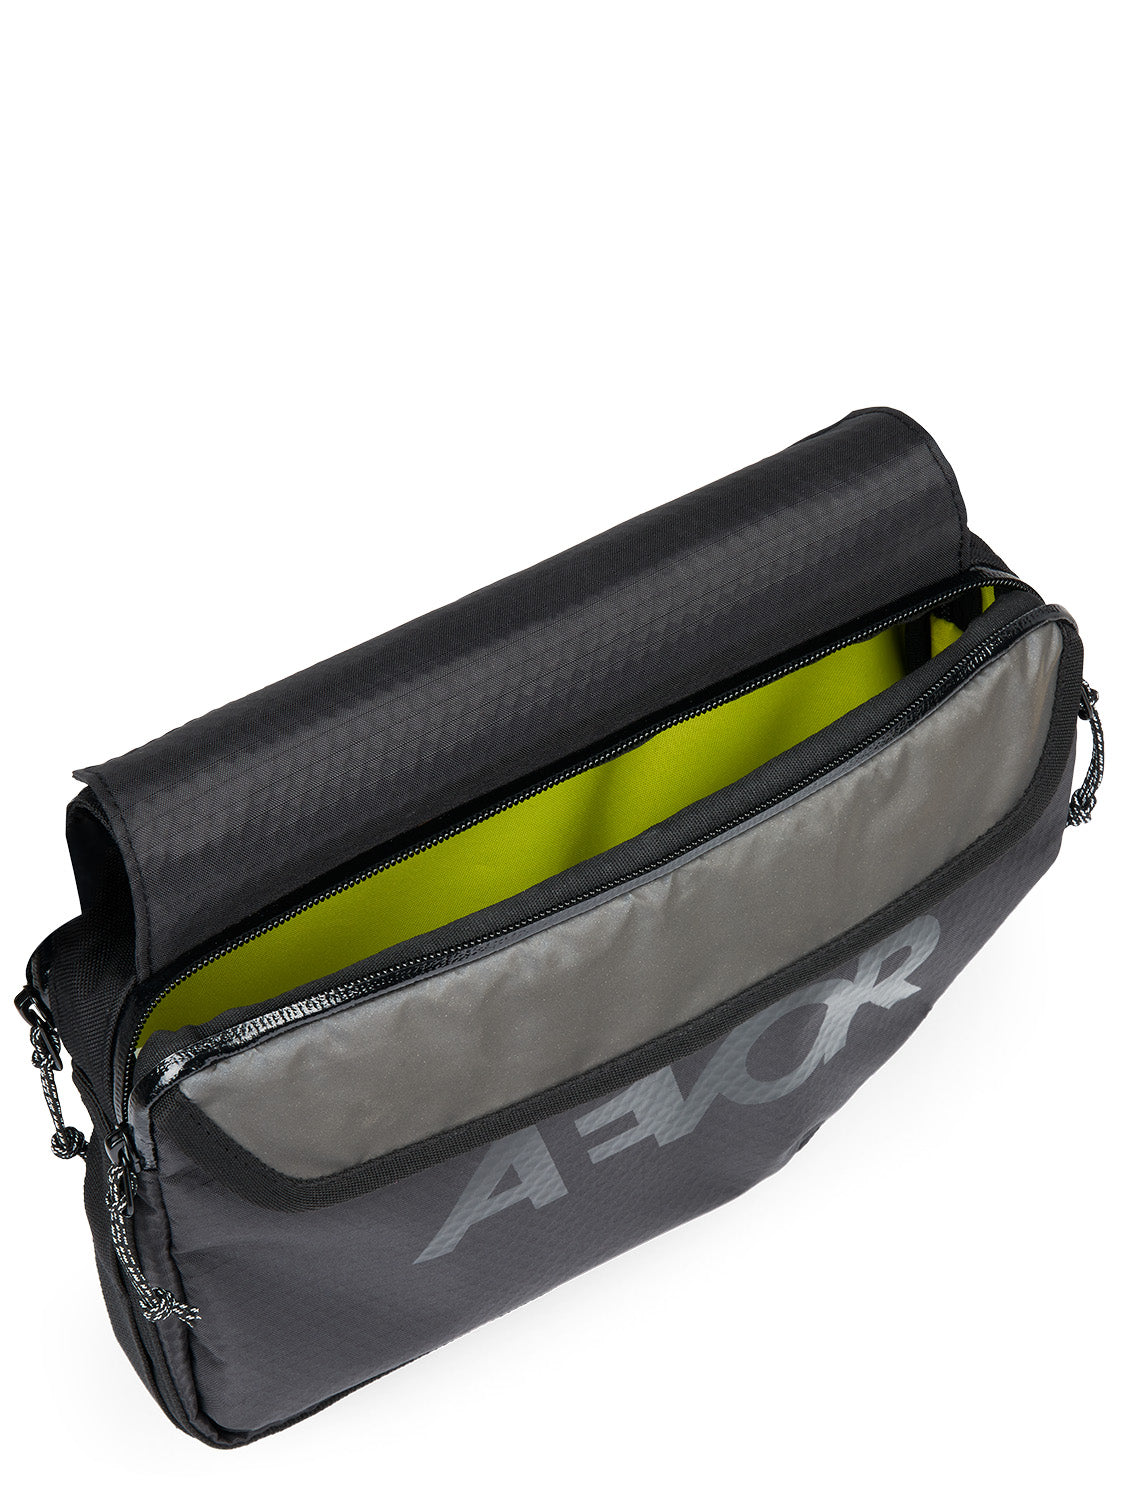 AEVOR-Frame-Bag-Medium-Proof-Black-open